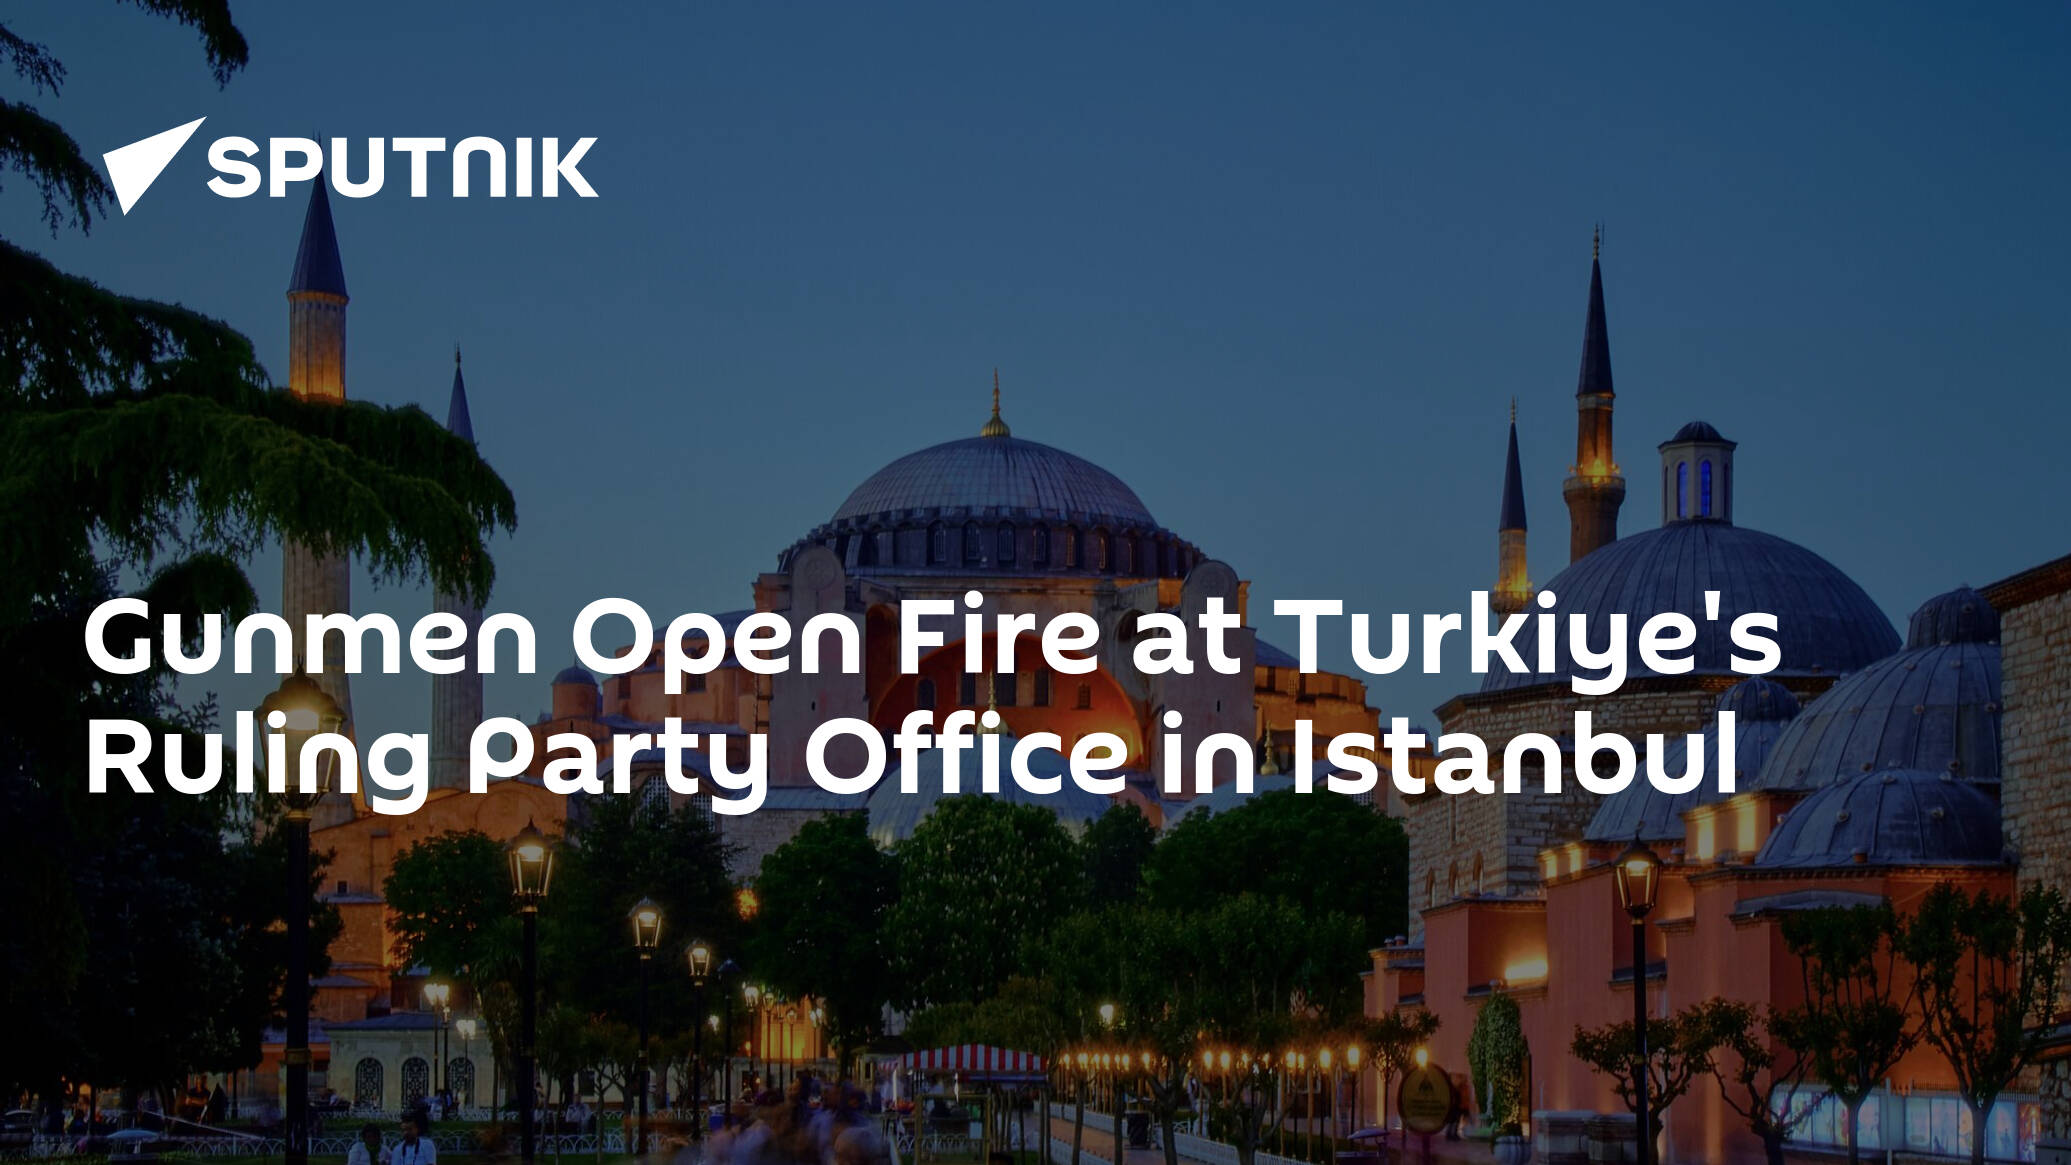 Gunmen Open Fire at Turkiye's Ruling Party Office in Istanbul